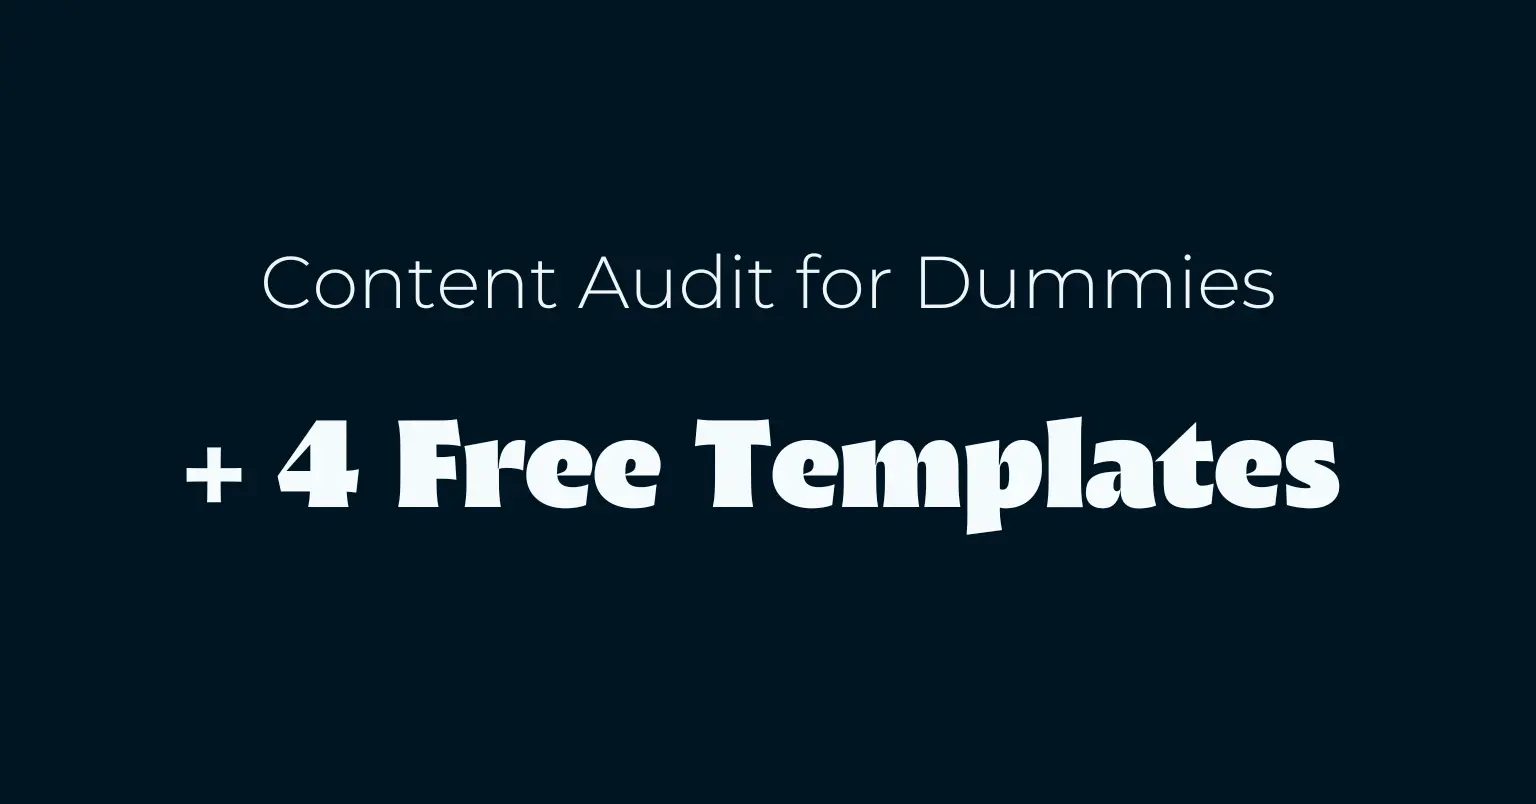 Content Audit for Dummies